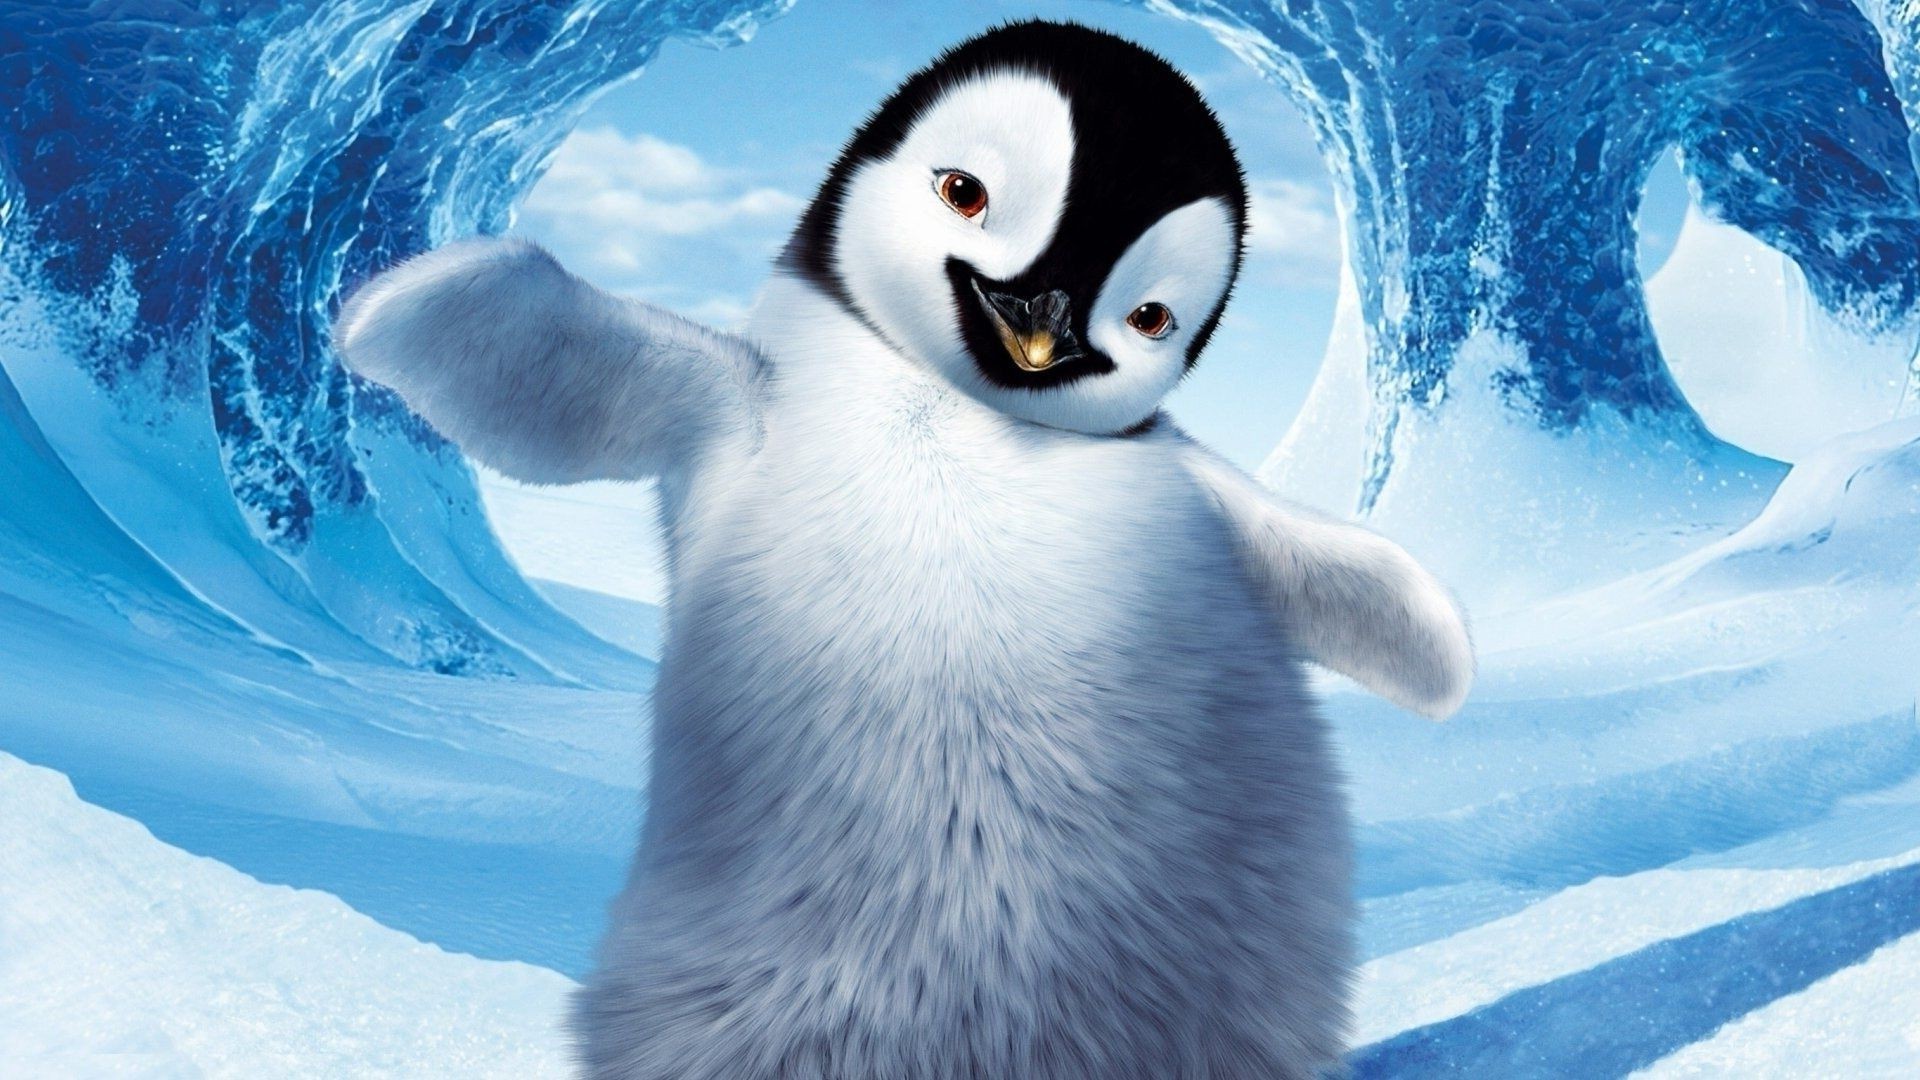 1920x1080 Happy feet ice snow Cartoon character penguin. Desktop wallpapers for free.